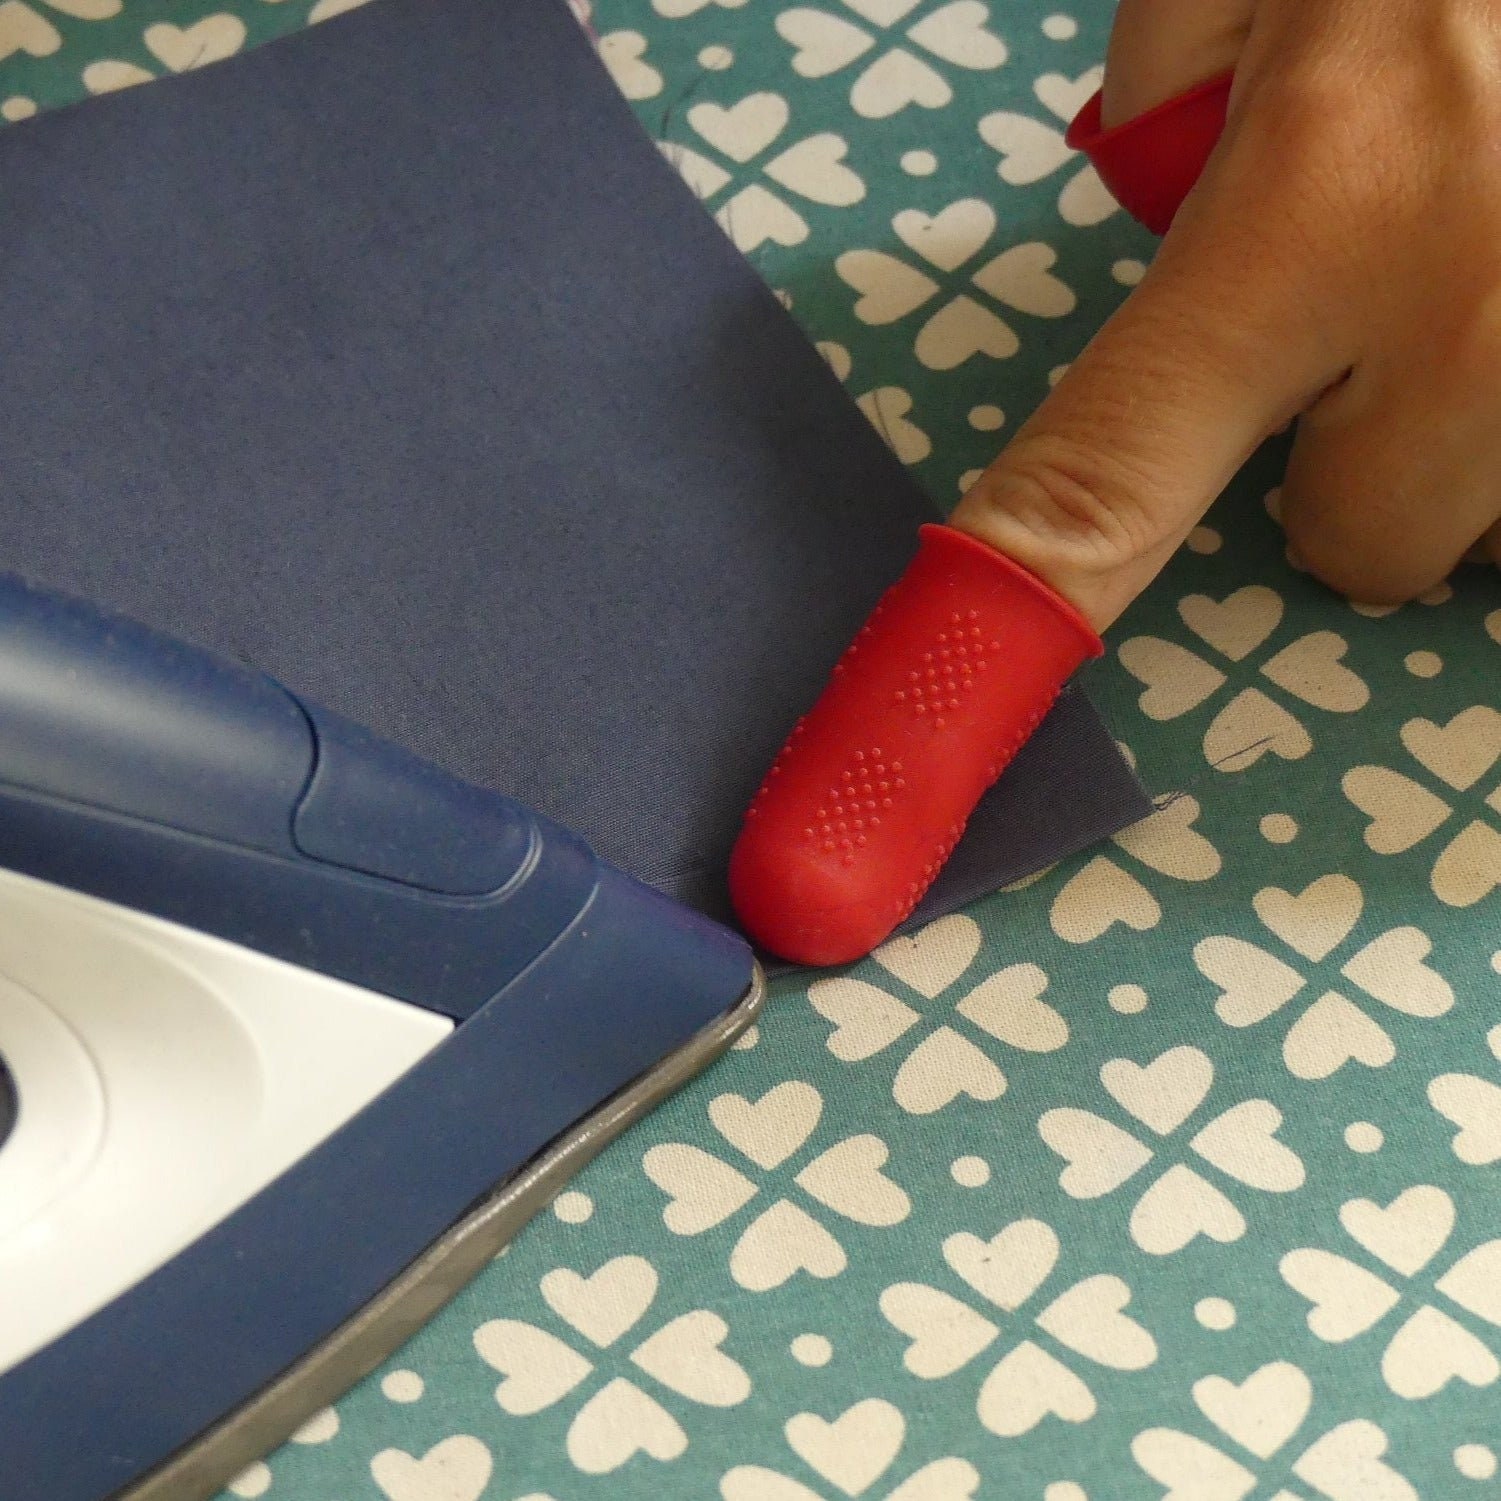 Sew Straight Set - 4 tools to sew a straight stitch like a pro!